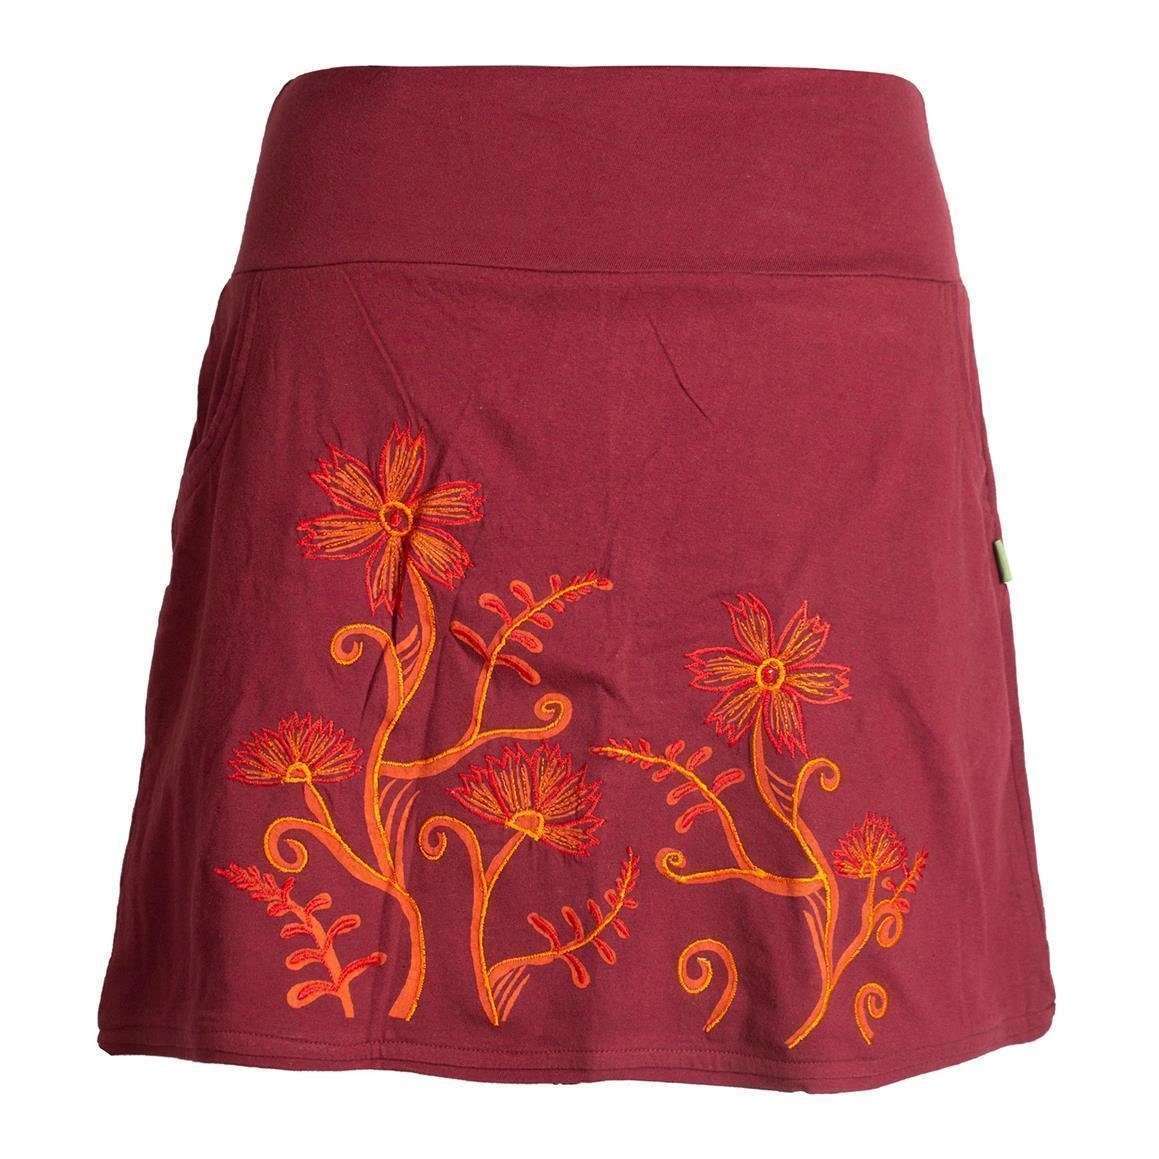 Мини-юбка в стиле хиппи с луковым узором, цветочная юбка с карманами-кешер